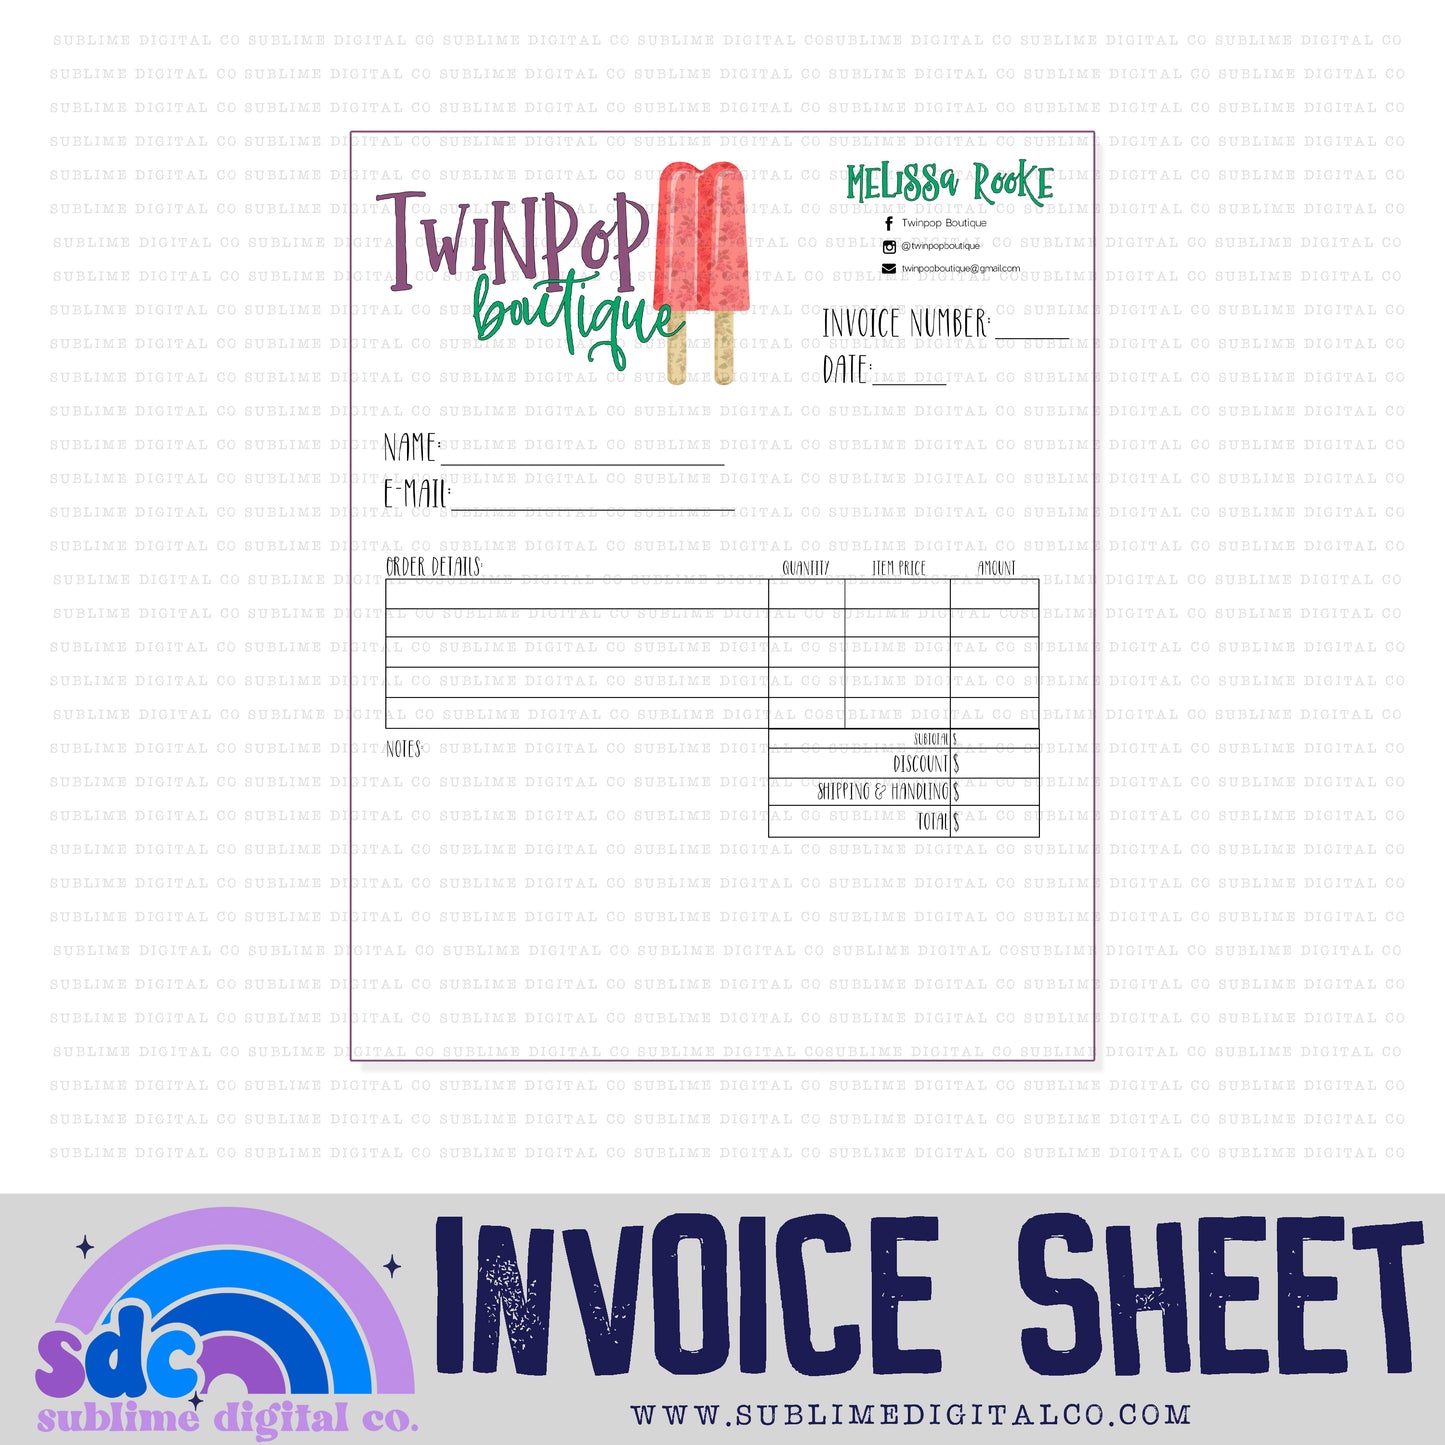 Invoice Sheet with Logo Design • Business Branding • Custom Digital Designs